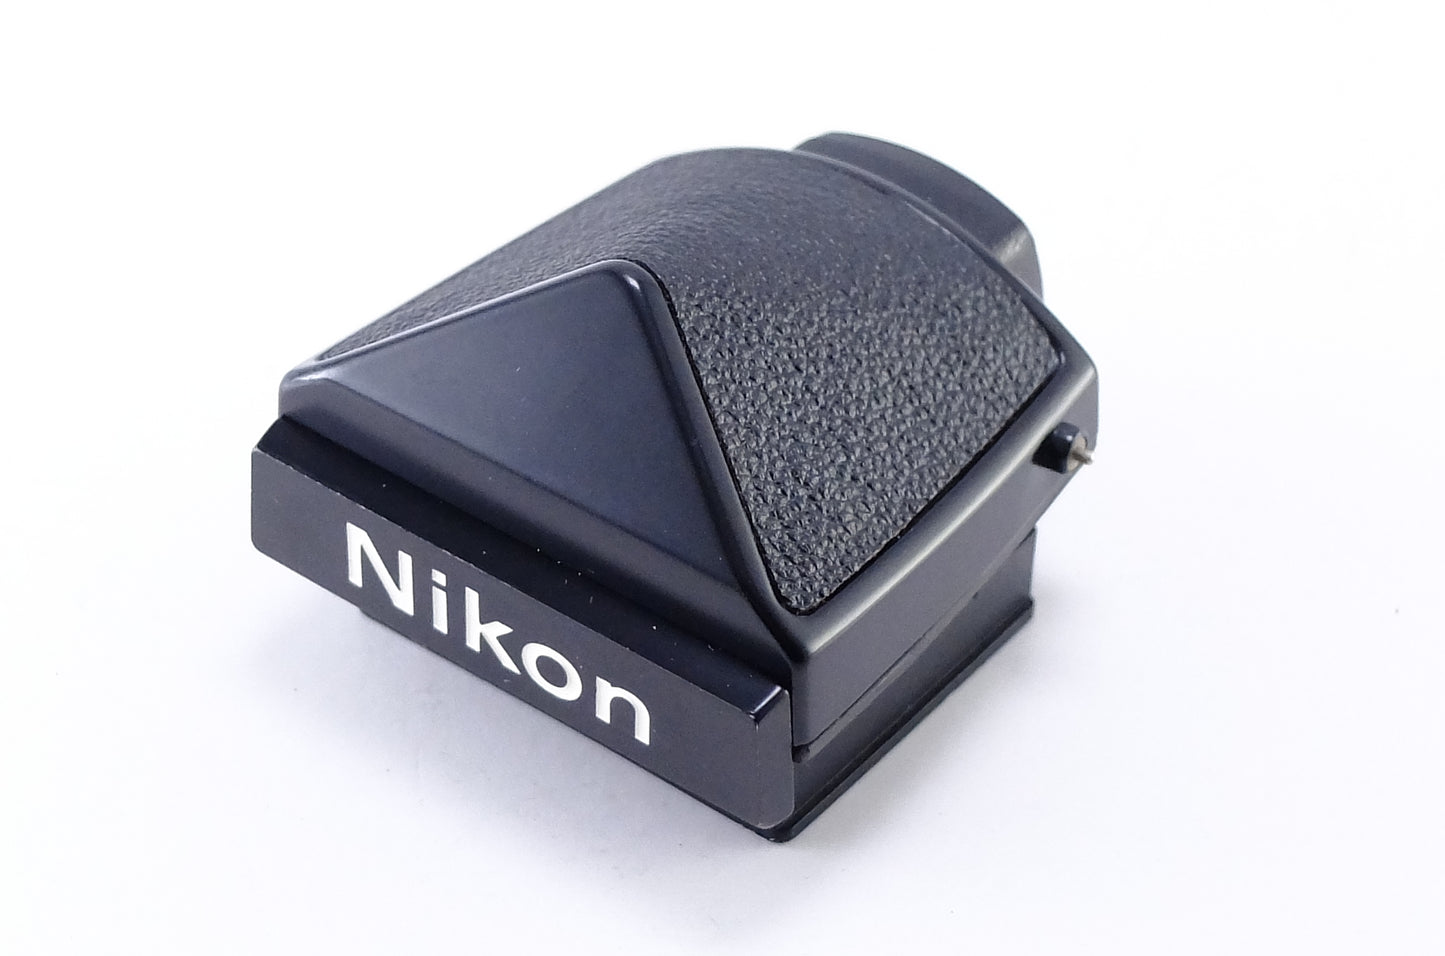 【Nikon】DE-1 後期型 (ブラック) Nikon F2用アイレベルファインダー[1116408314617]